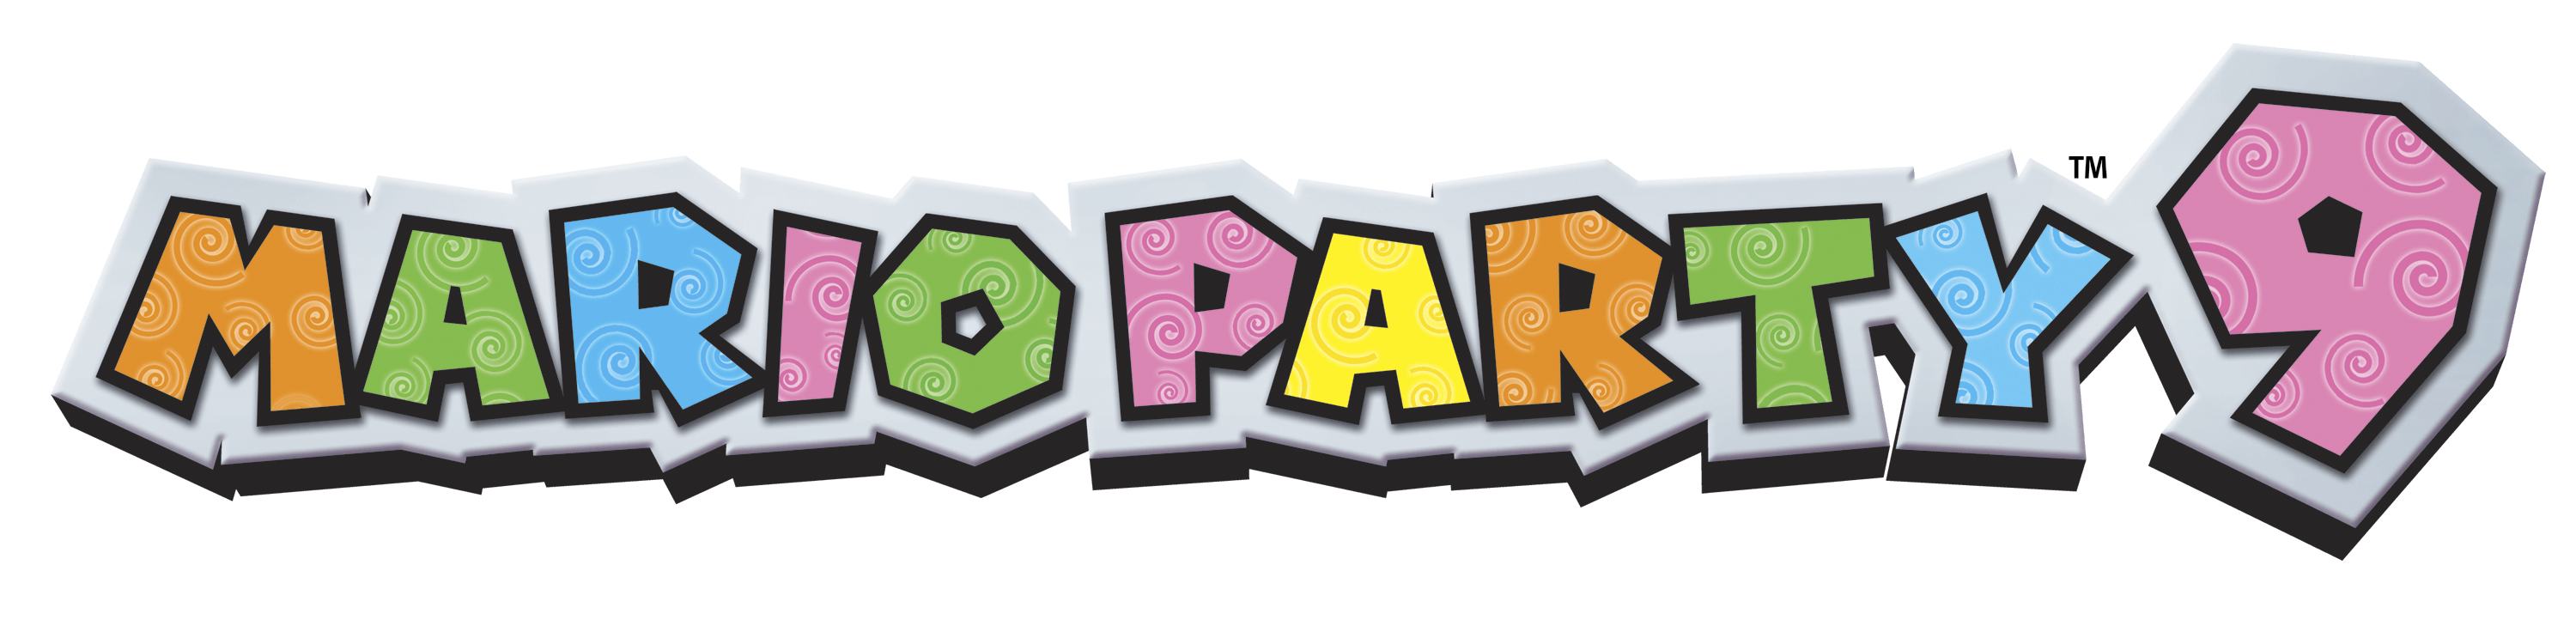 Mario Party 2 Logo - Logo Changes for Mario Party 9 Party Legacy